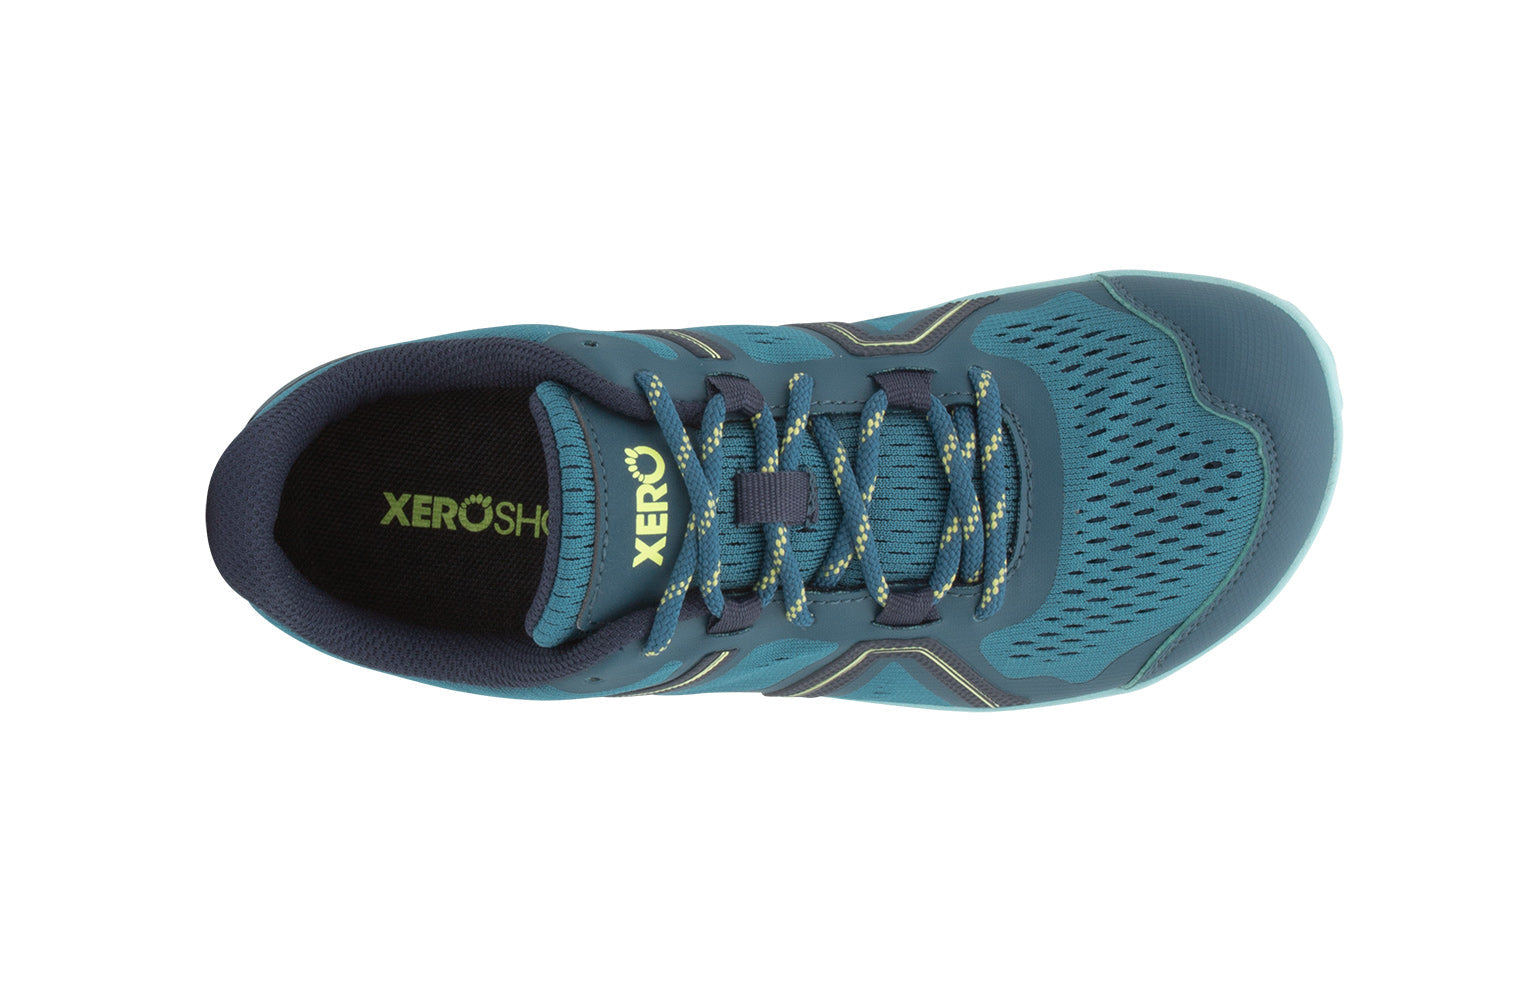 Xero Shoes Mesa Trail barfods trailsko til kvinder i farven lagoon, top